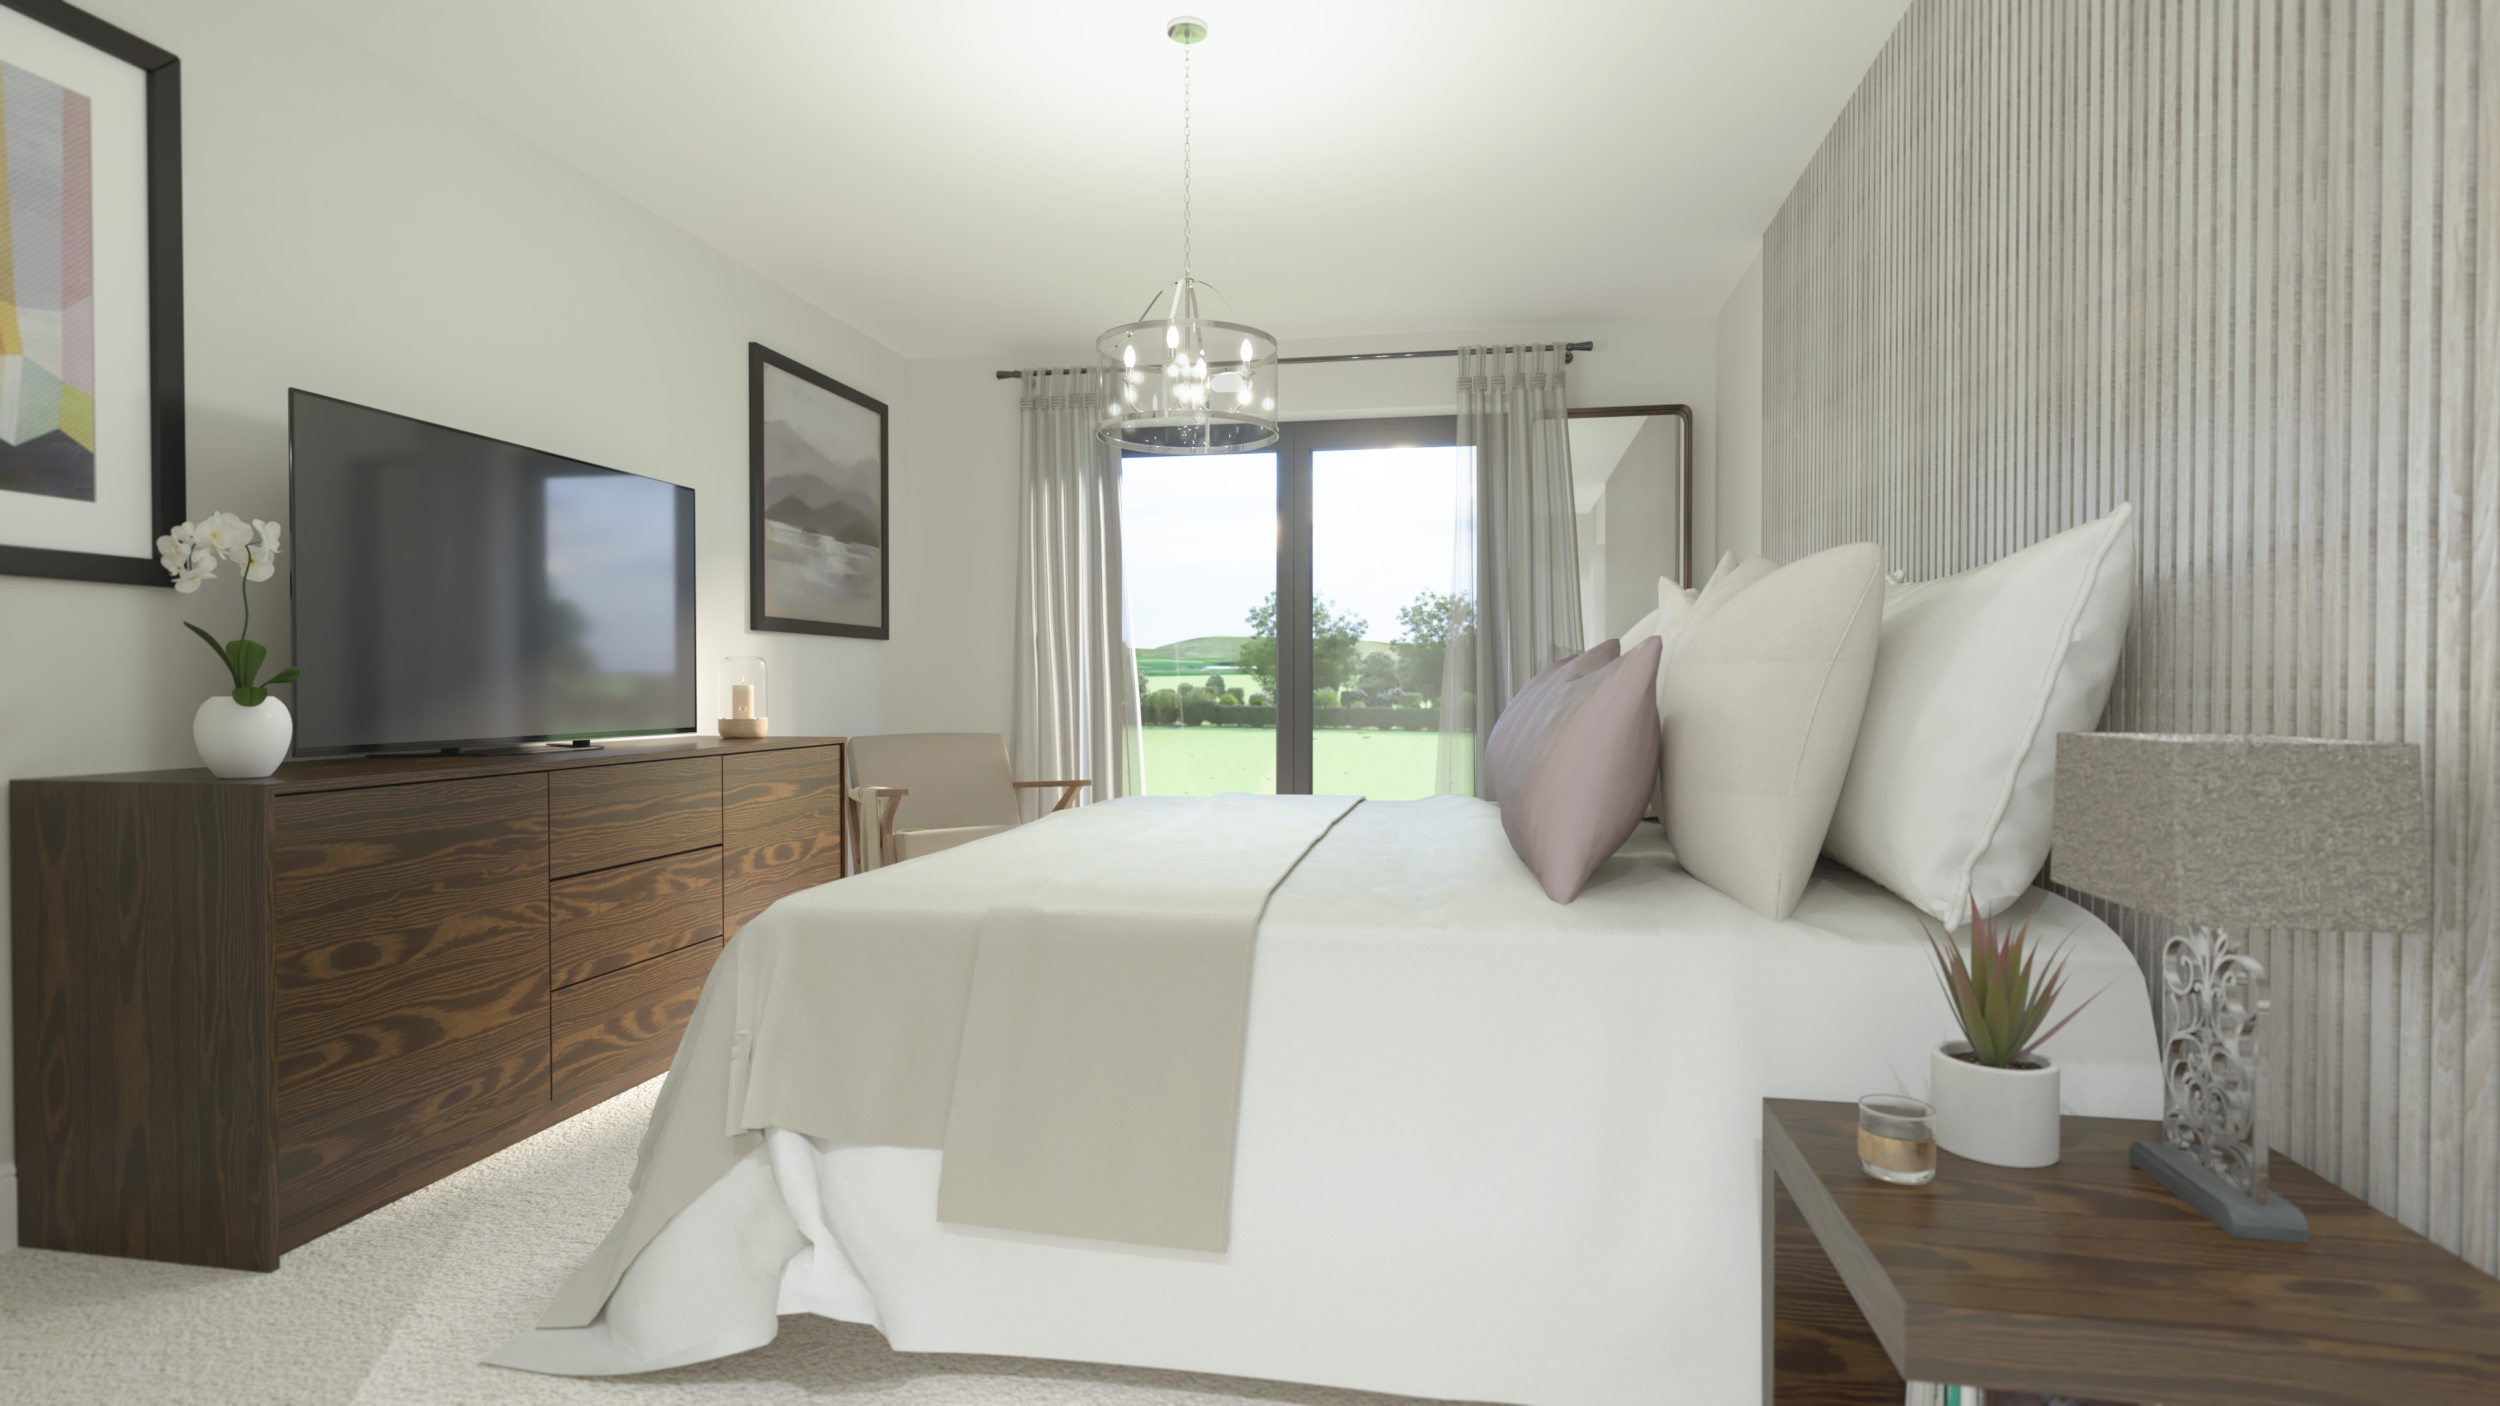 CGI by Linear CGI Studio. The Stables Property Development, Preston, Lancashire. master bedroom CGI